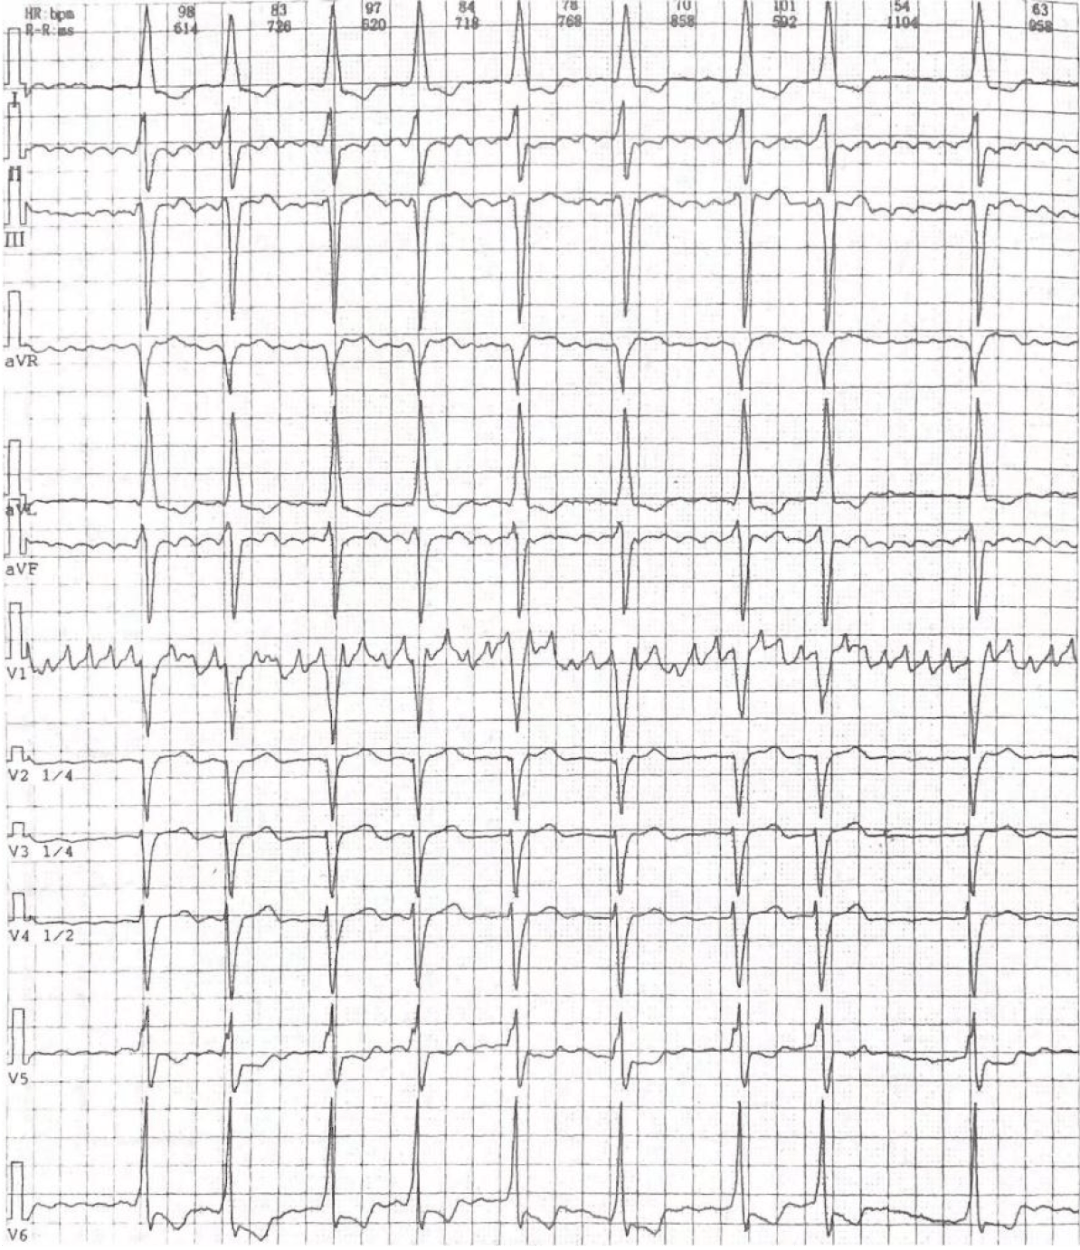 1. b 型预激综合征合并心房颤动心电图